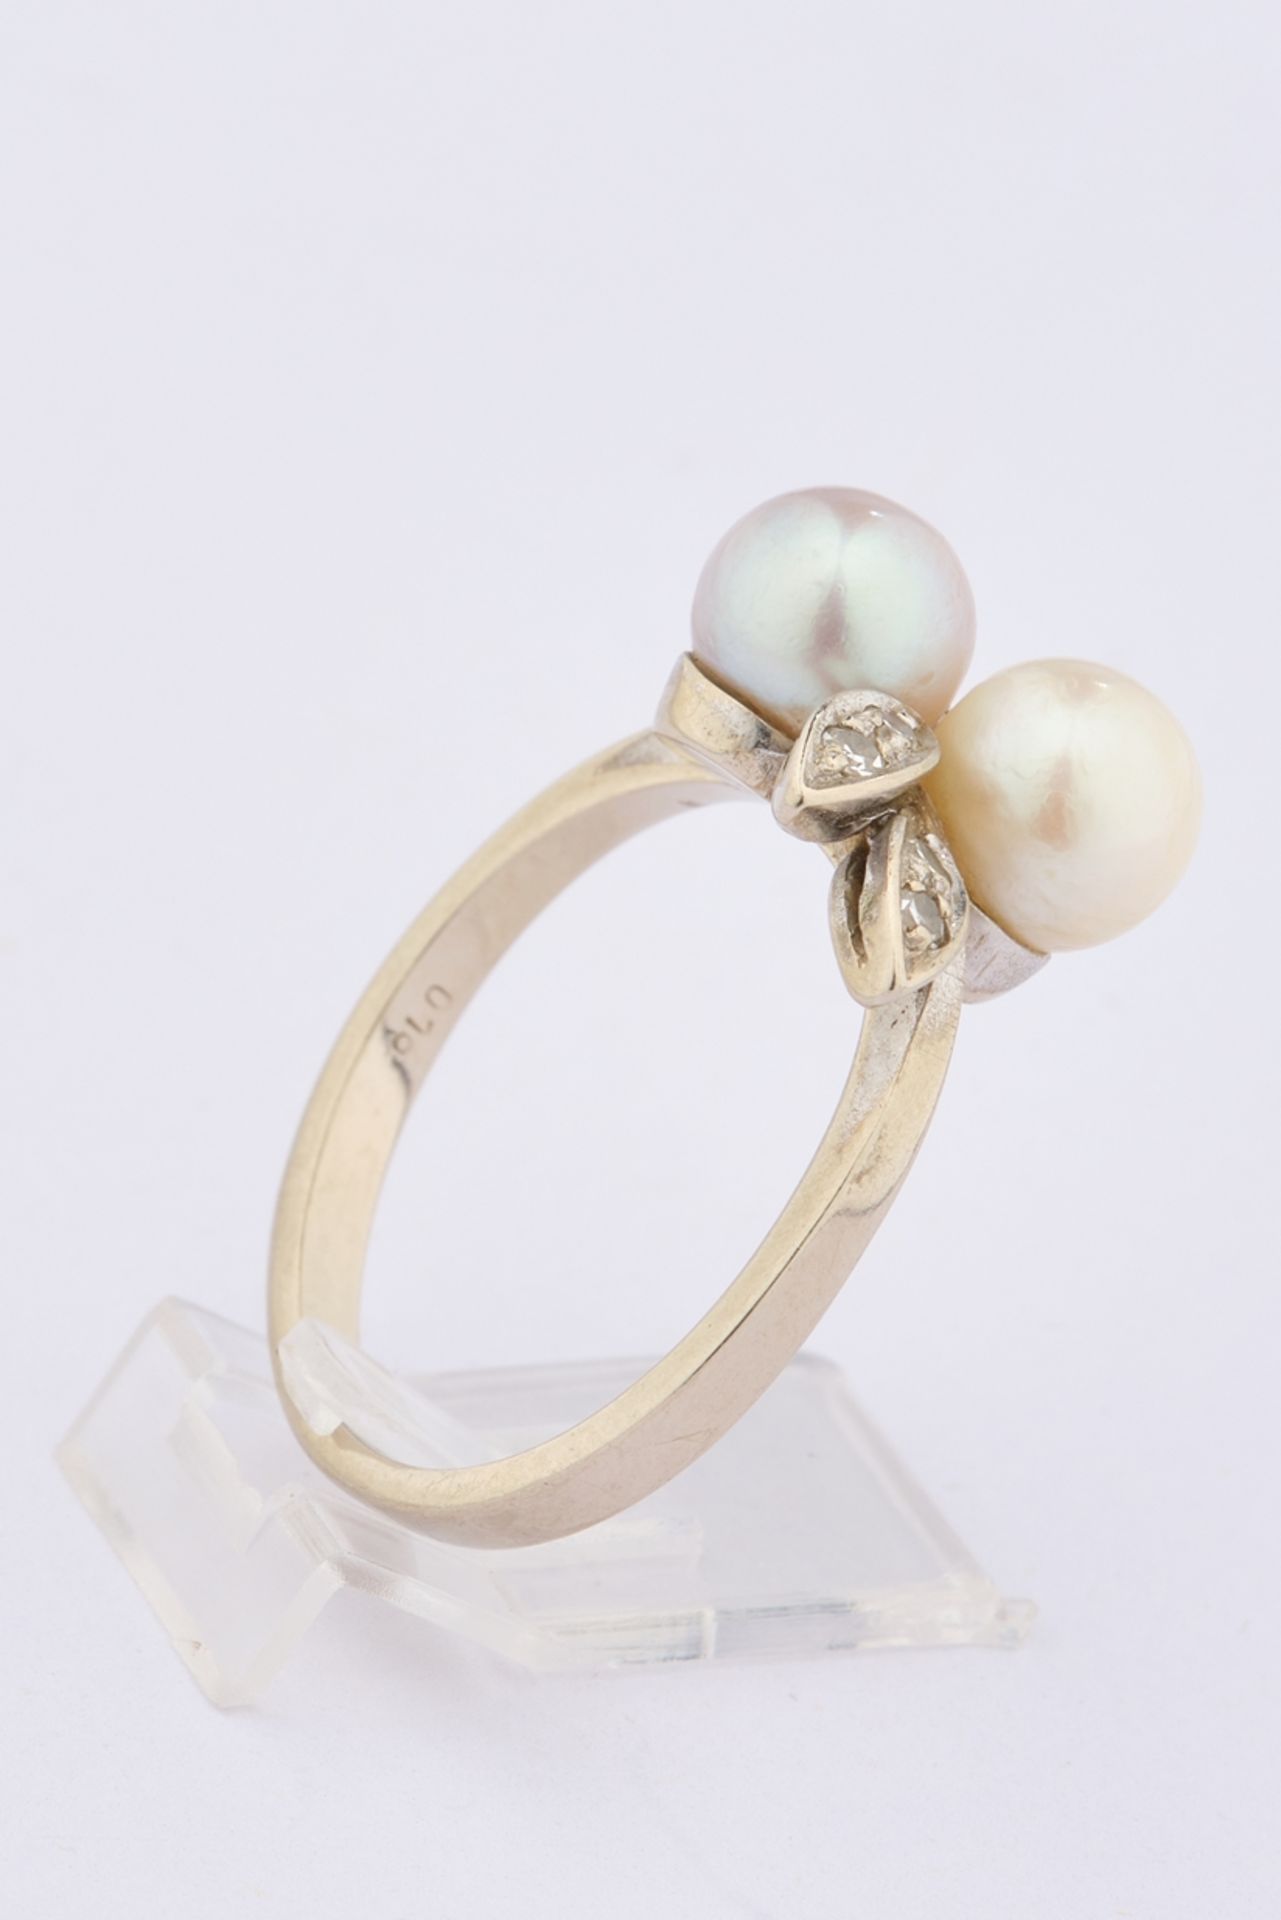 Ring, WG 585, 2 Perlen, Brillanten, in Blütenform, RM 18, 4.88 g - Image 4 of 4